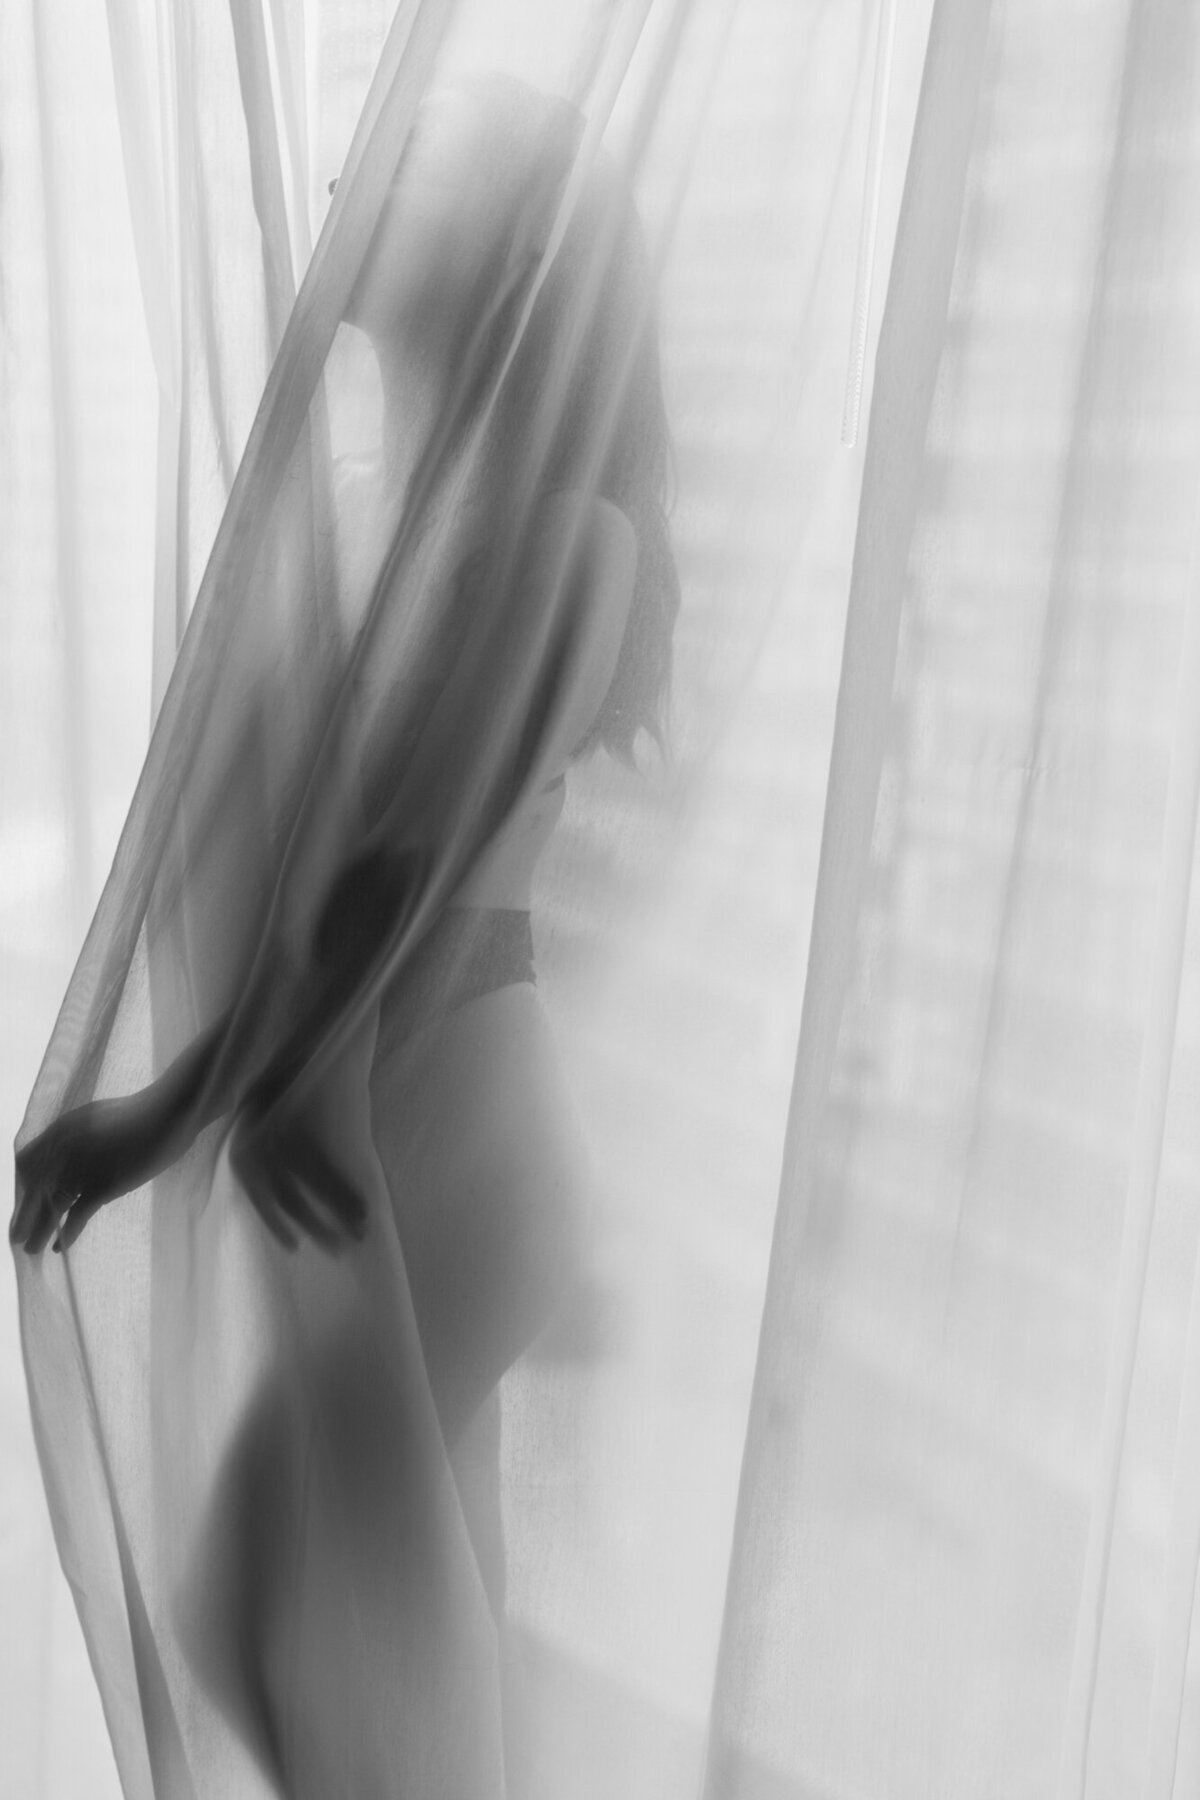 An artistic black and white boudoir photo